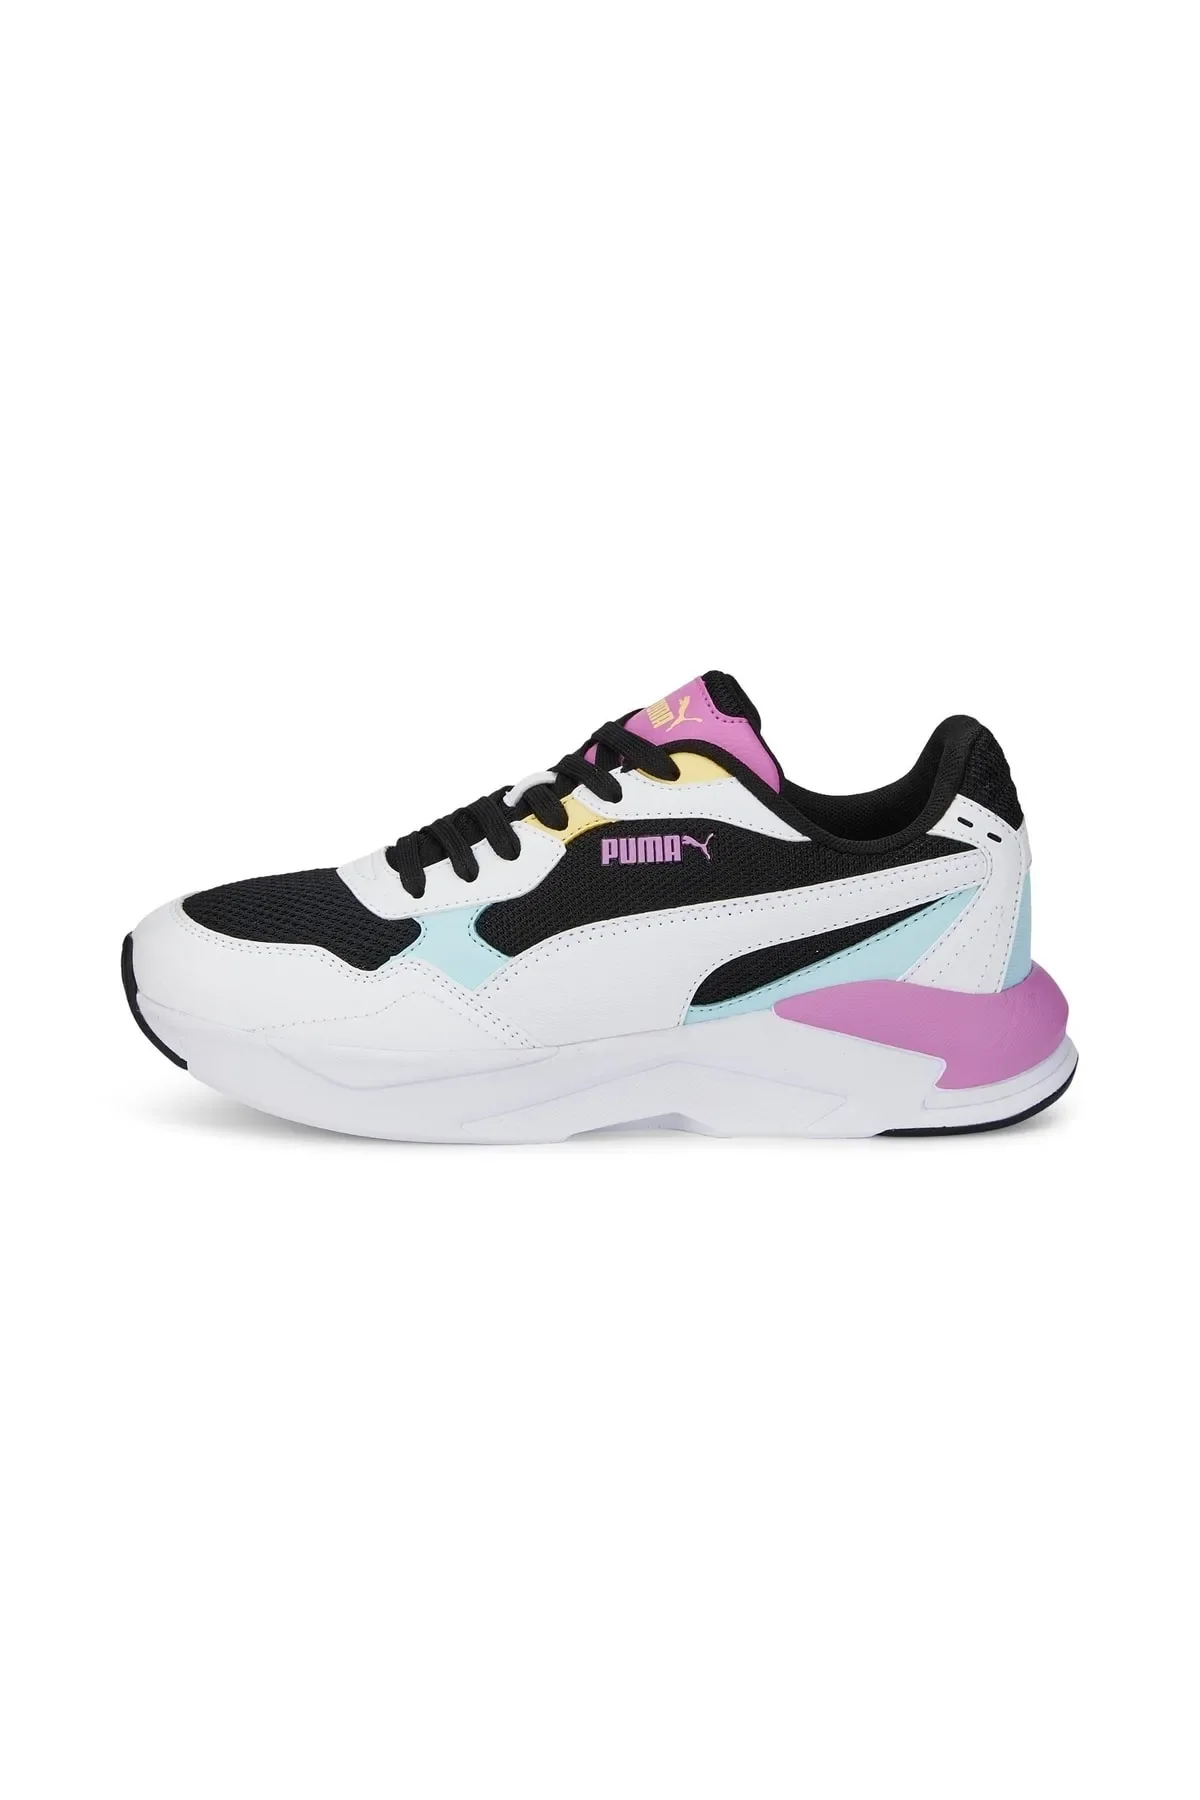 X-Ray Speed Lite - Kadın Sneaker Ayakkabı 384639 -Siyah - 7